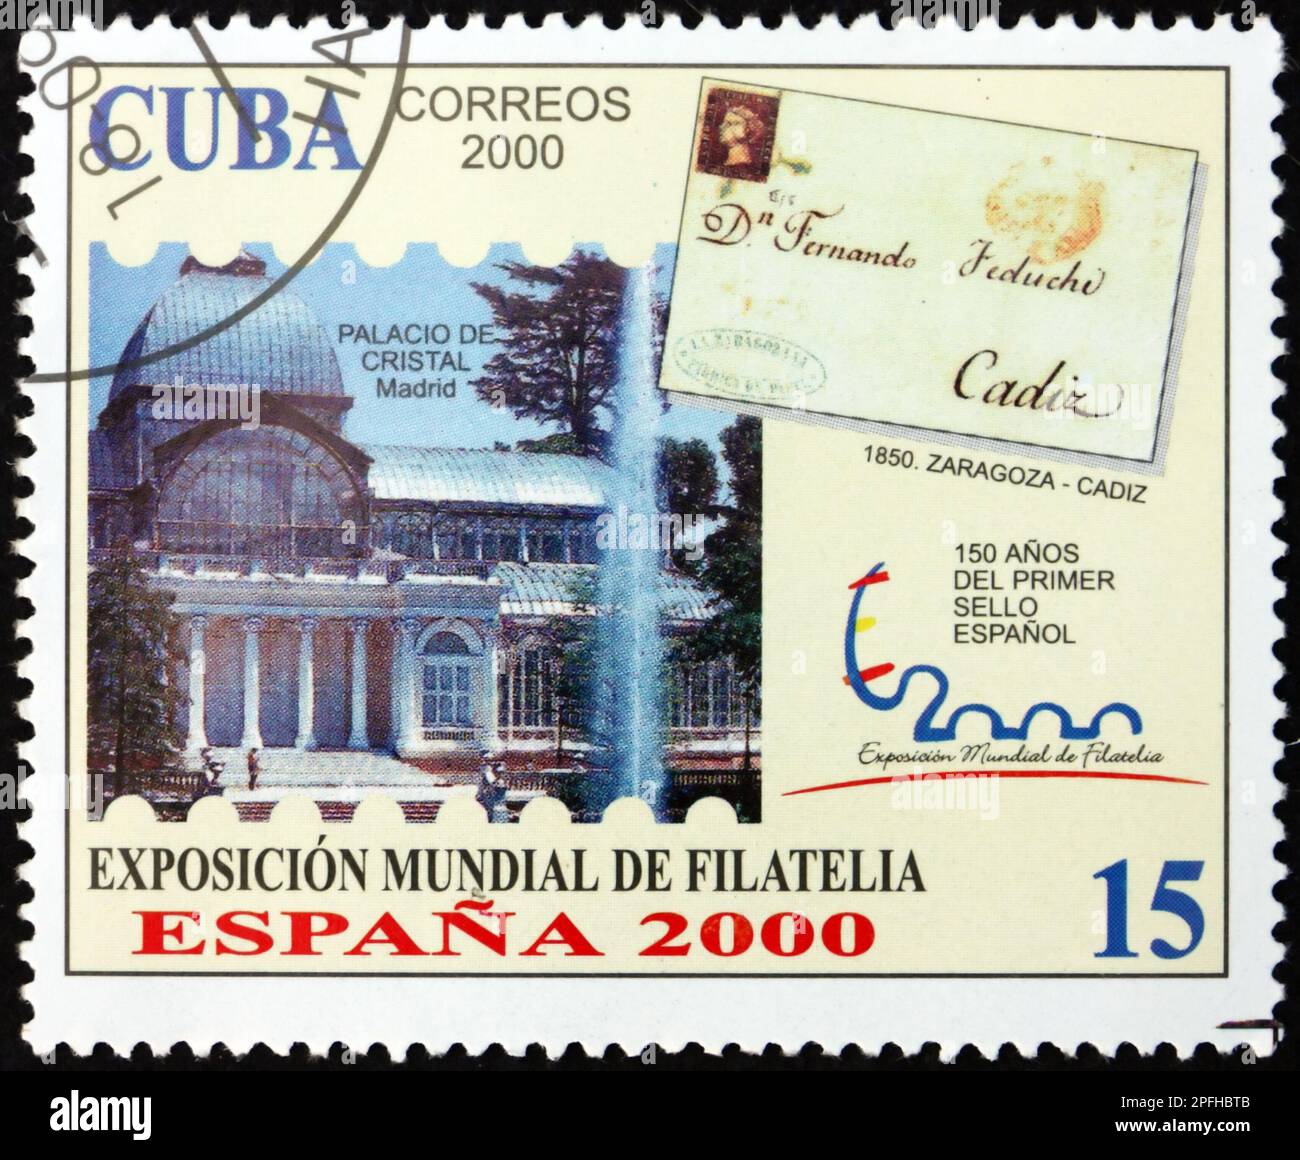 CUBA - CIRCA 2000: Un sello impreso en Cuba muestra 1850 Zaragoza-Cádiz portada y Palacio de Cristal, Madrid, 2000 Exposición Mundial de Sellos, CIRCA 2000 Foto de stock